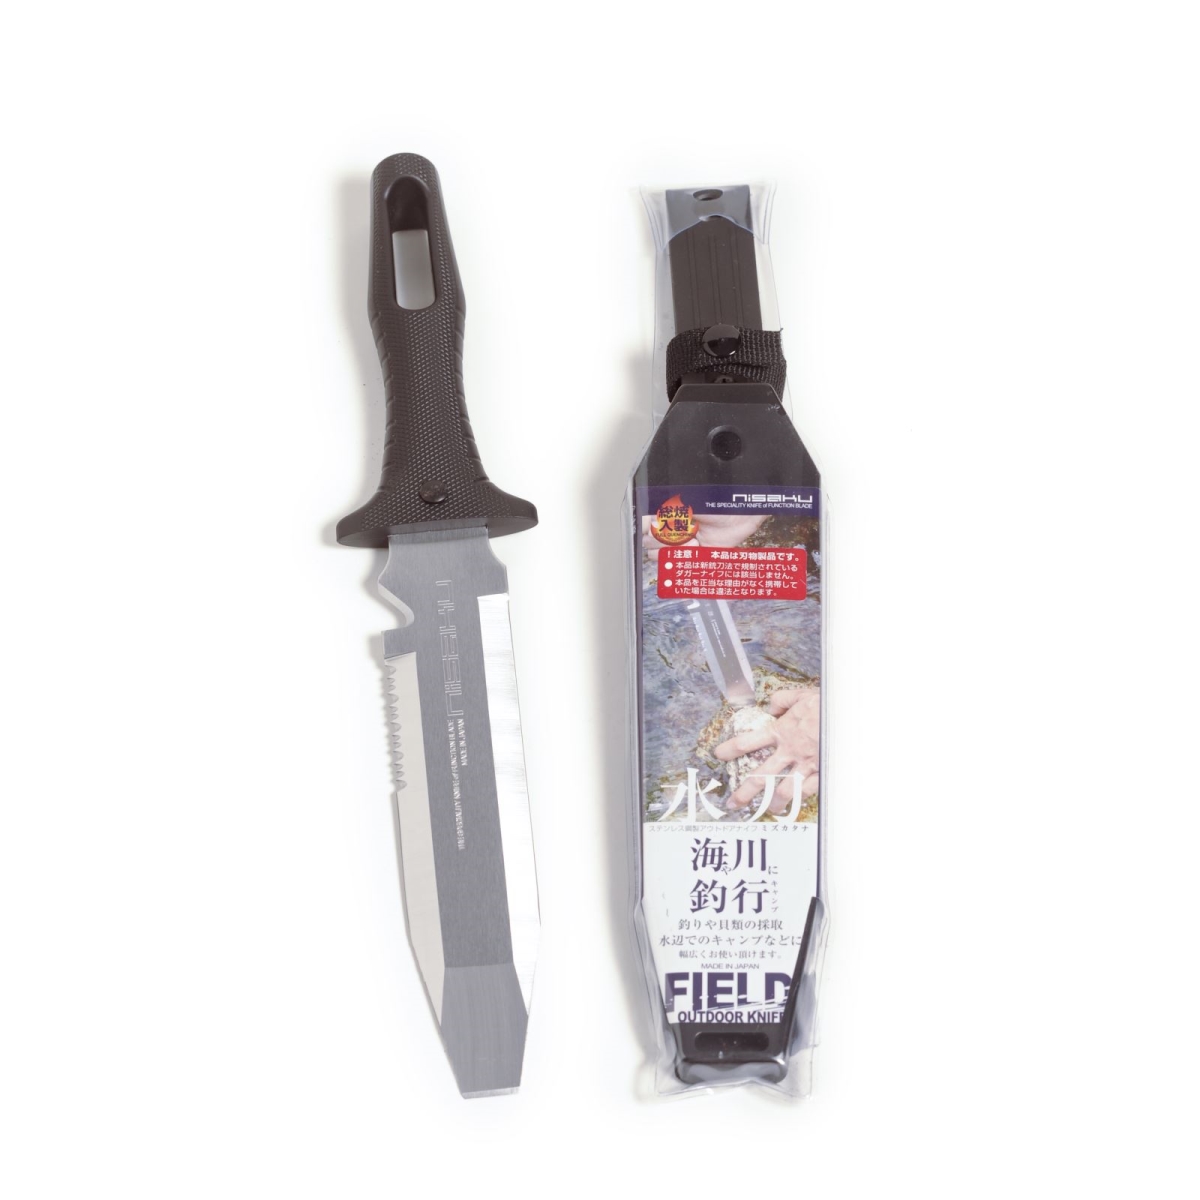 Njp820 7.5 In. Blade Mizukatana Stainless Steel Knife